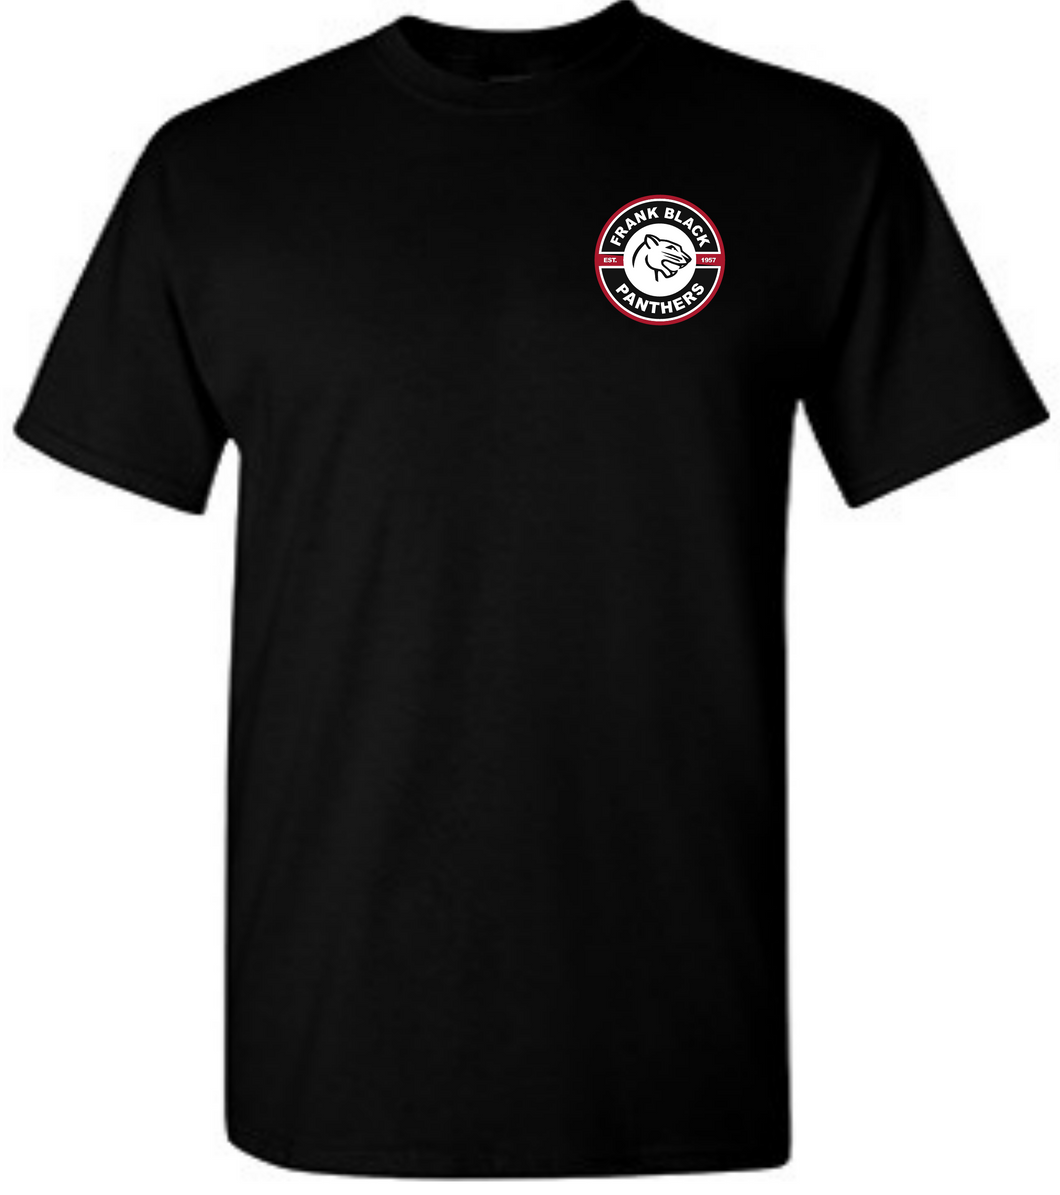 NEW *Unisex Black Round Panther Soft Cotton T-shirt*